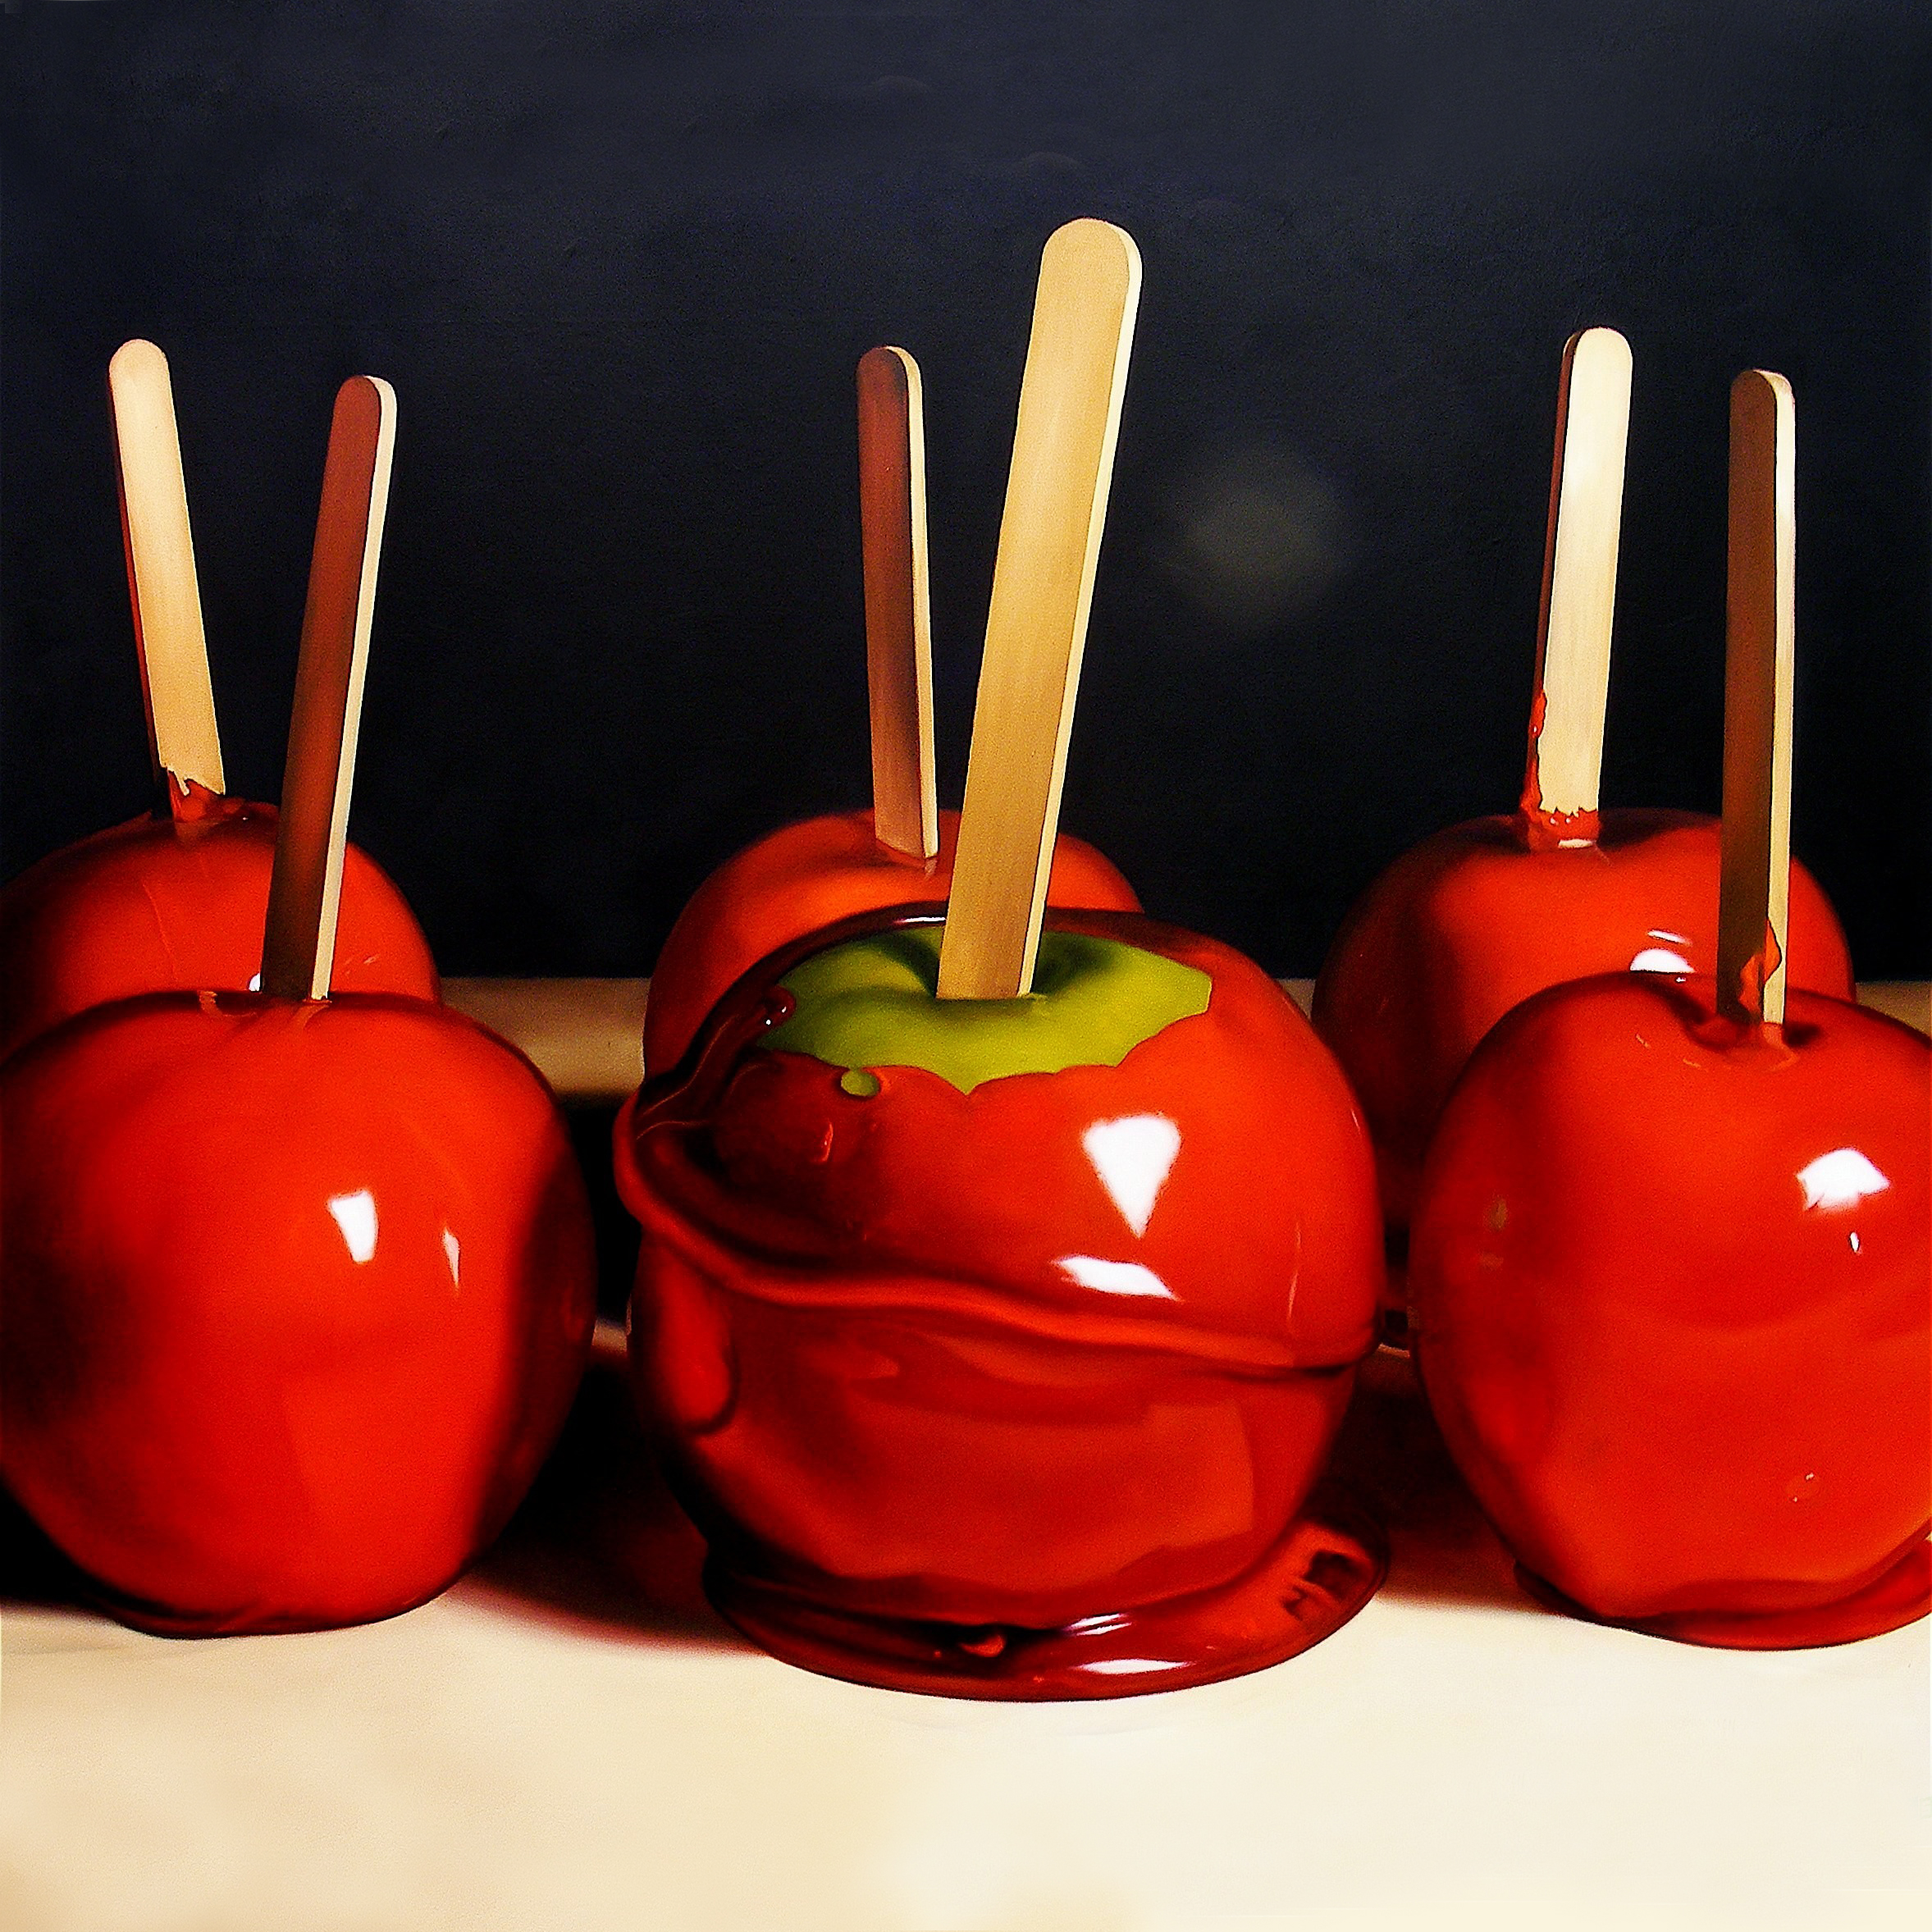 candy-apple-red.jpg